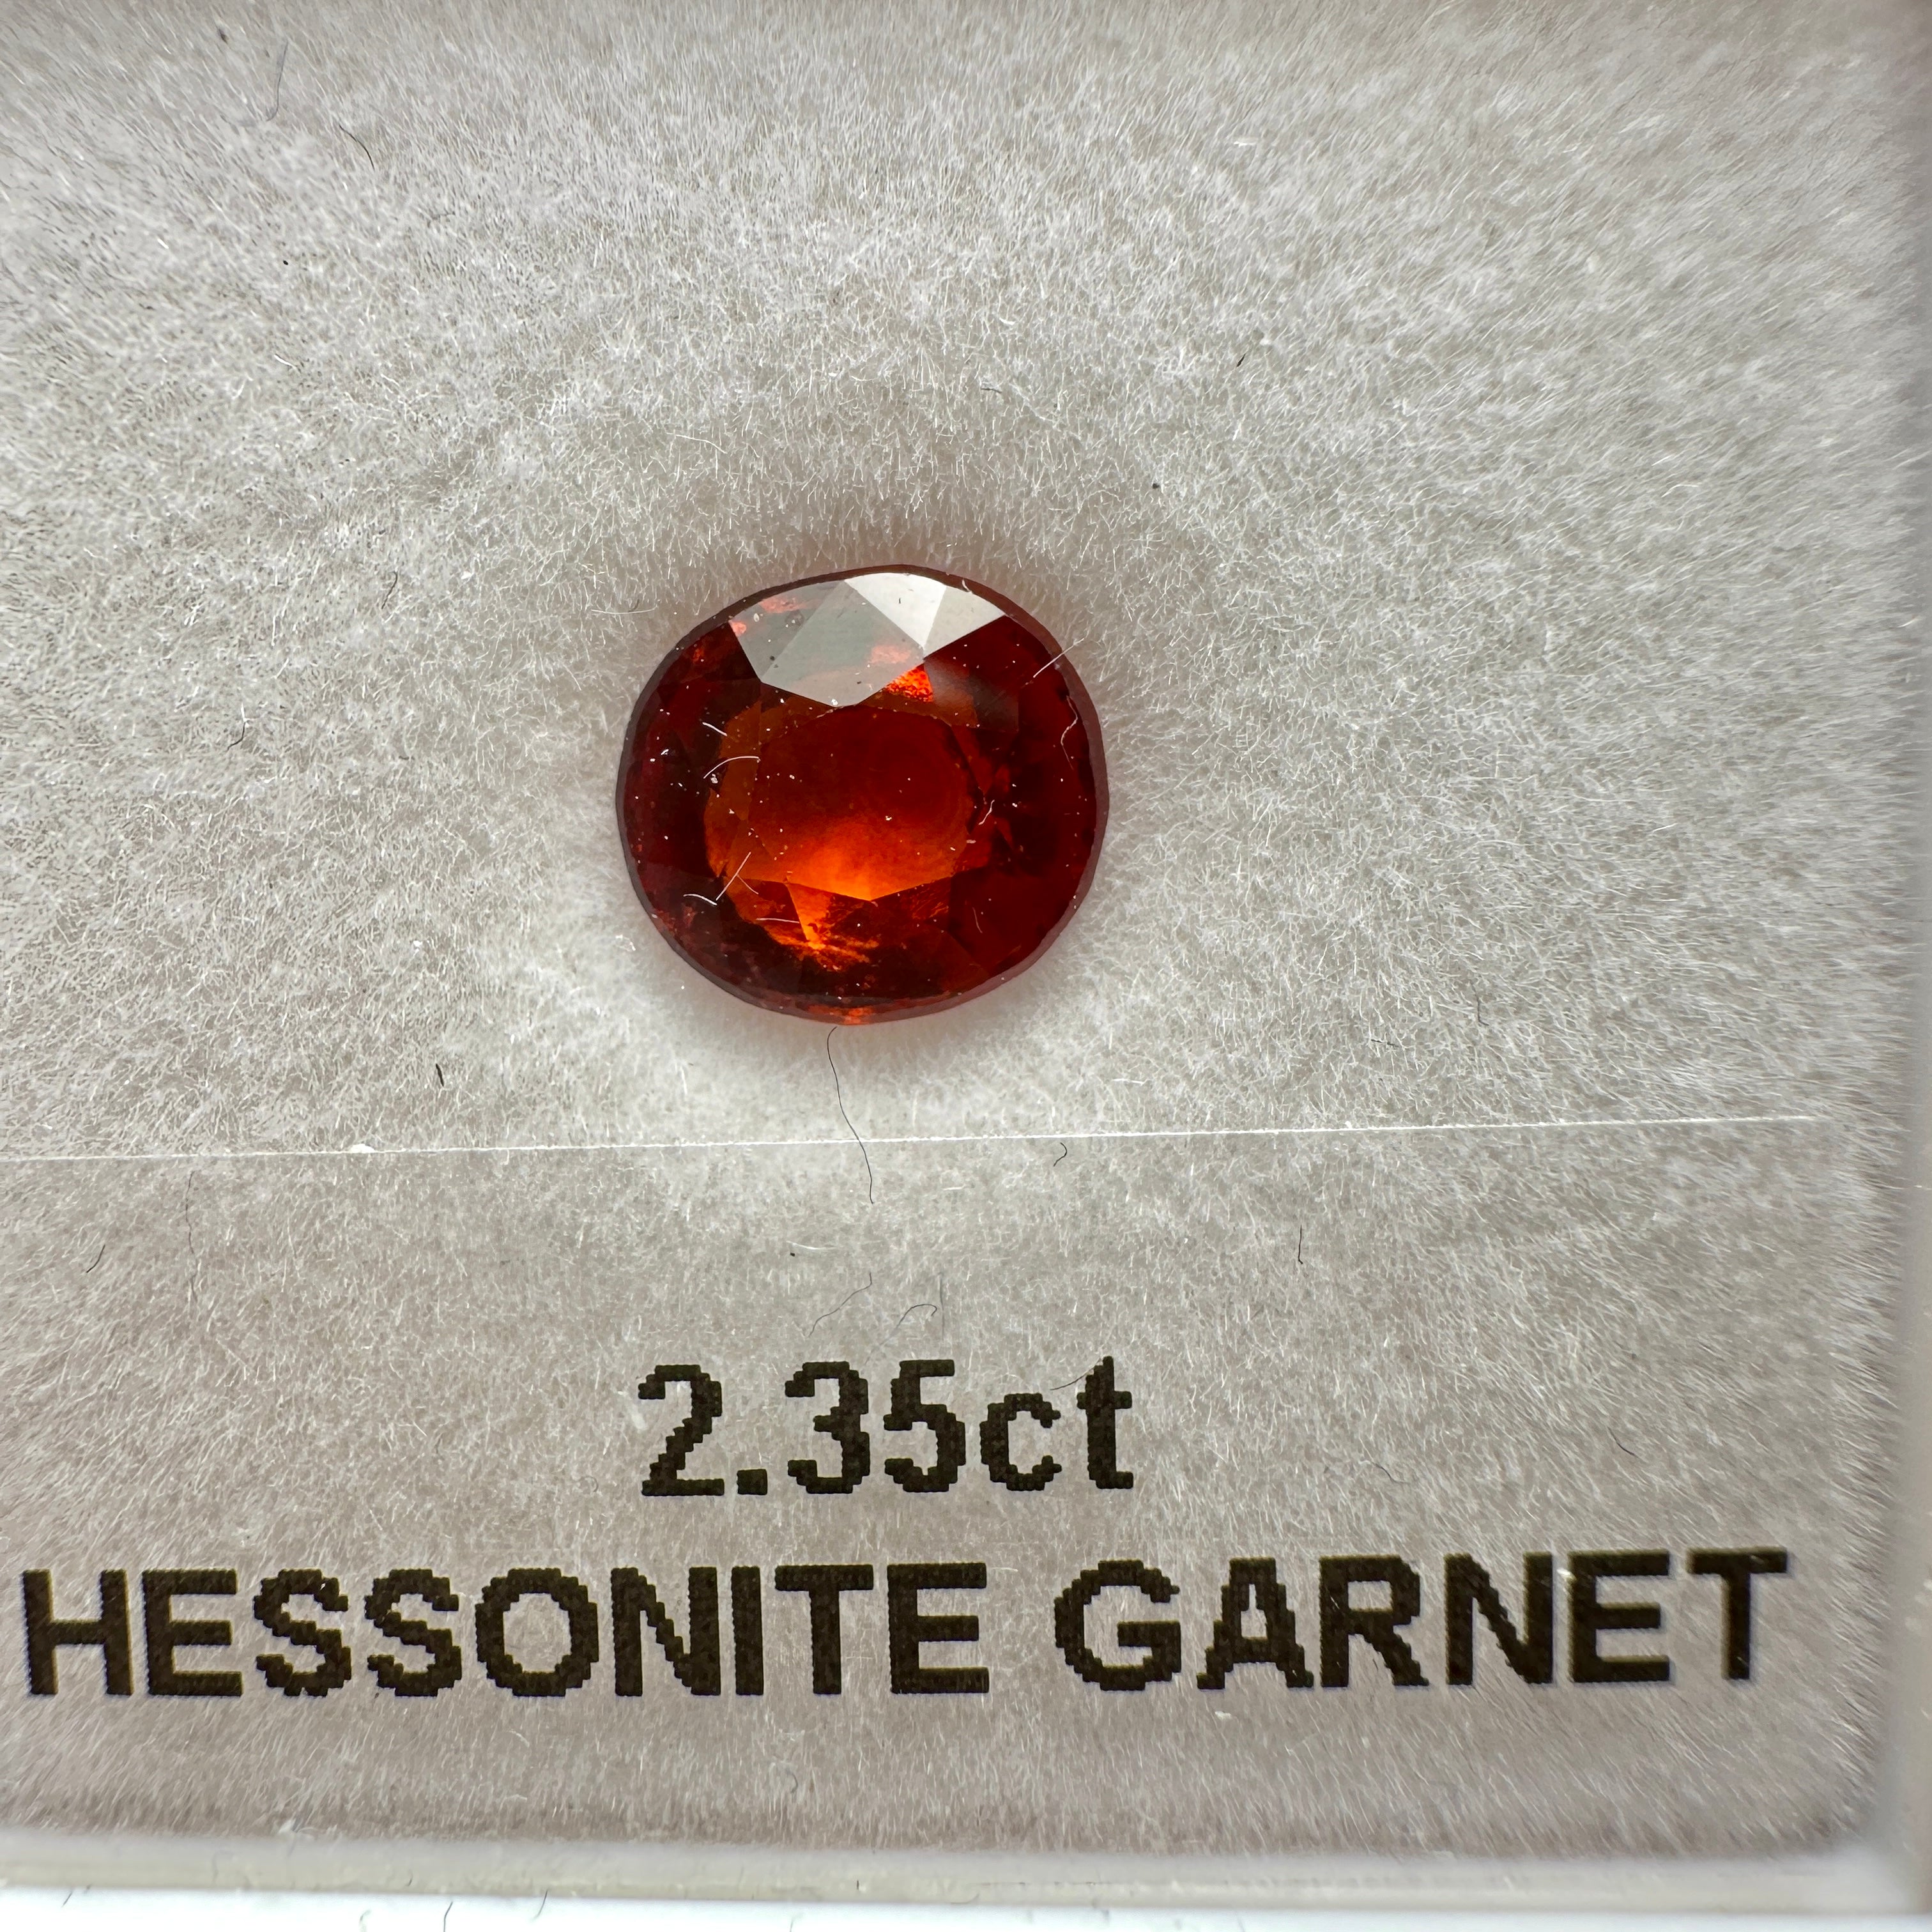 2.35ct Hessonite Garnet, Untreated Unheated, native cut